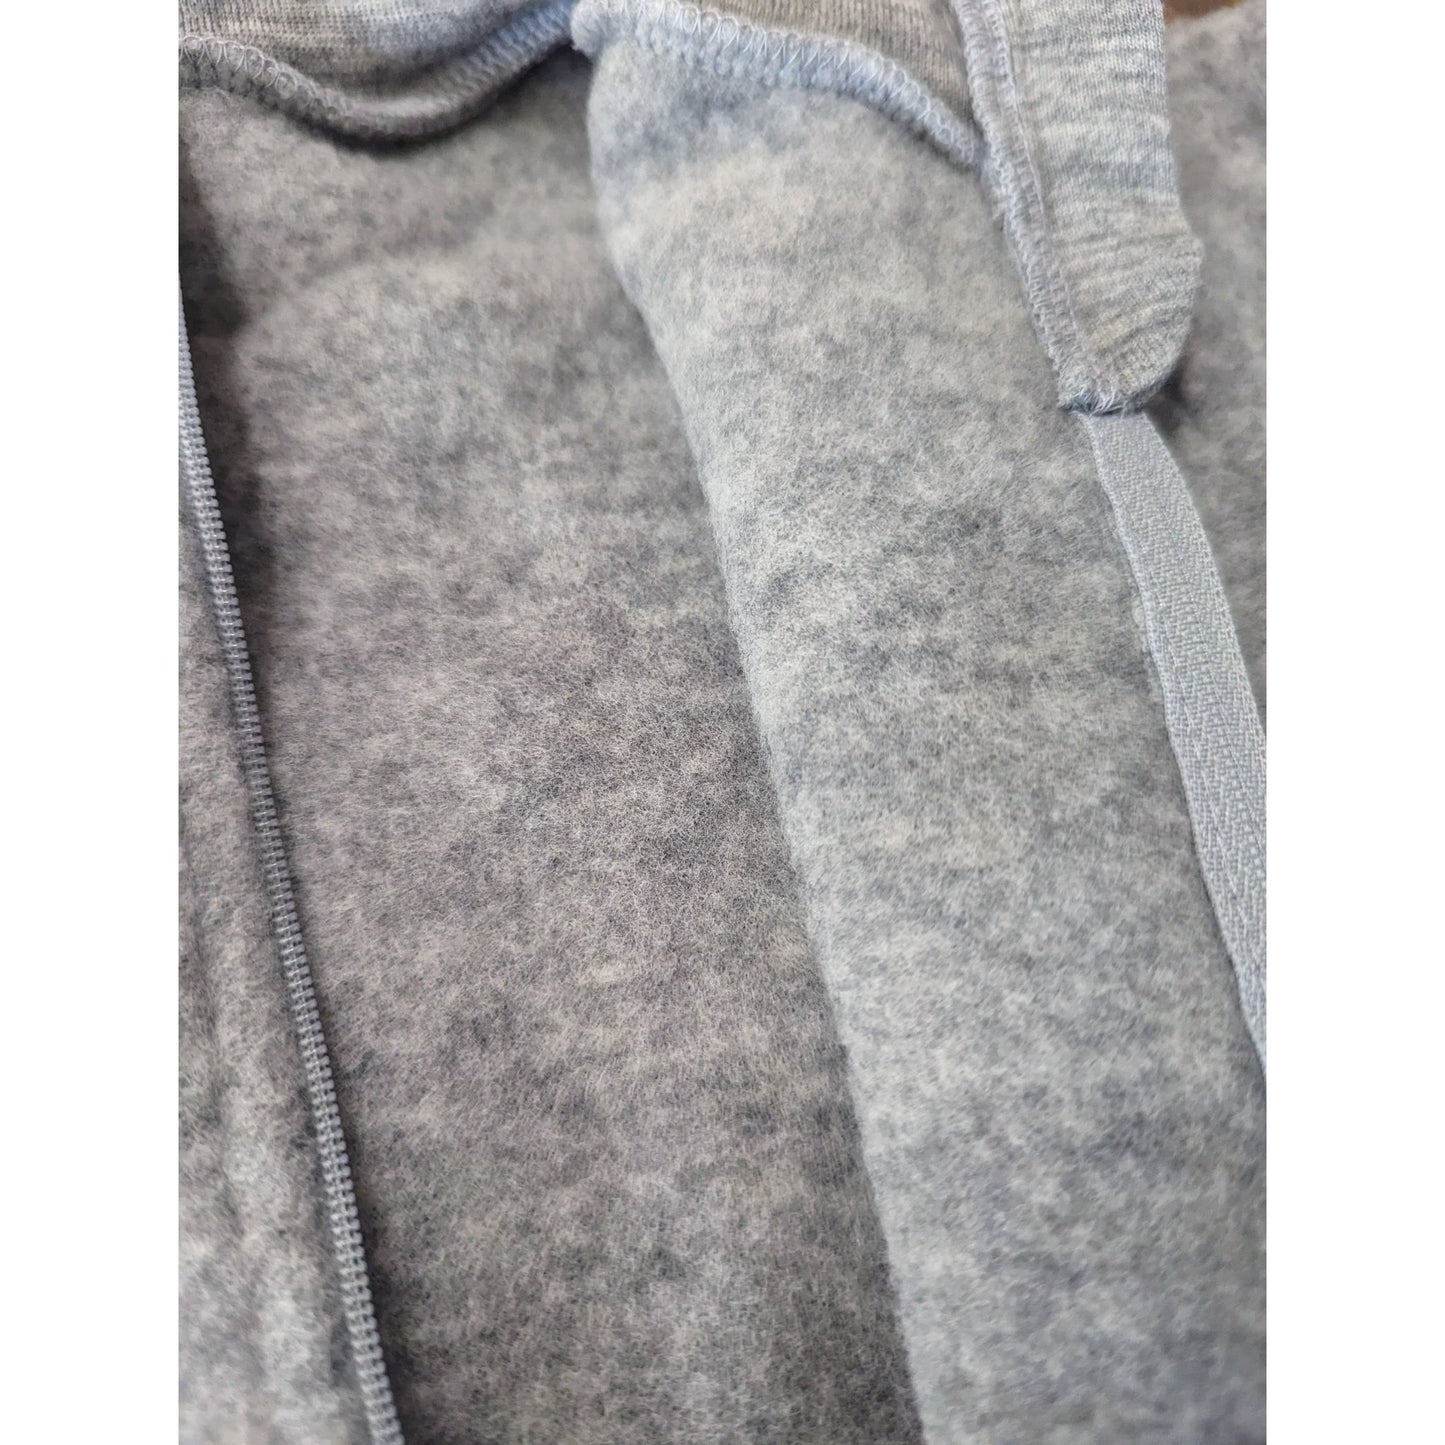 Engel - Organic Merino Wool Fleece Suit (12 months - 6 years) - Nature's Wild Child